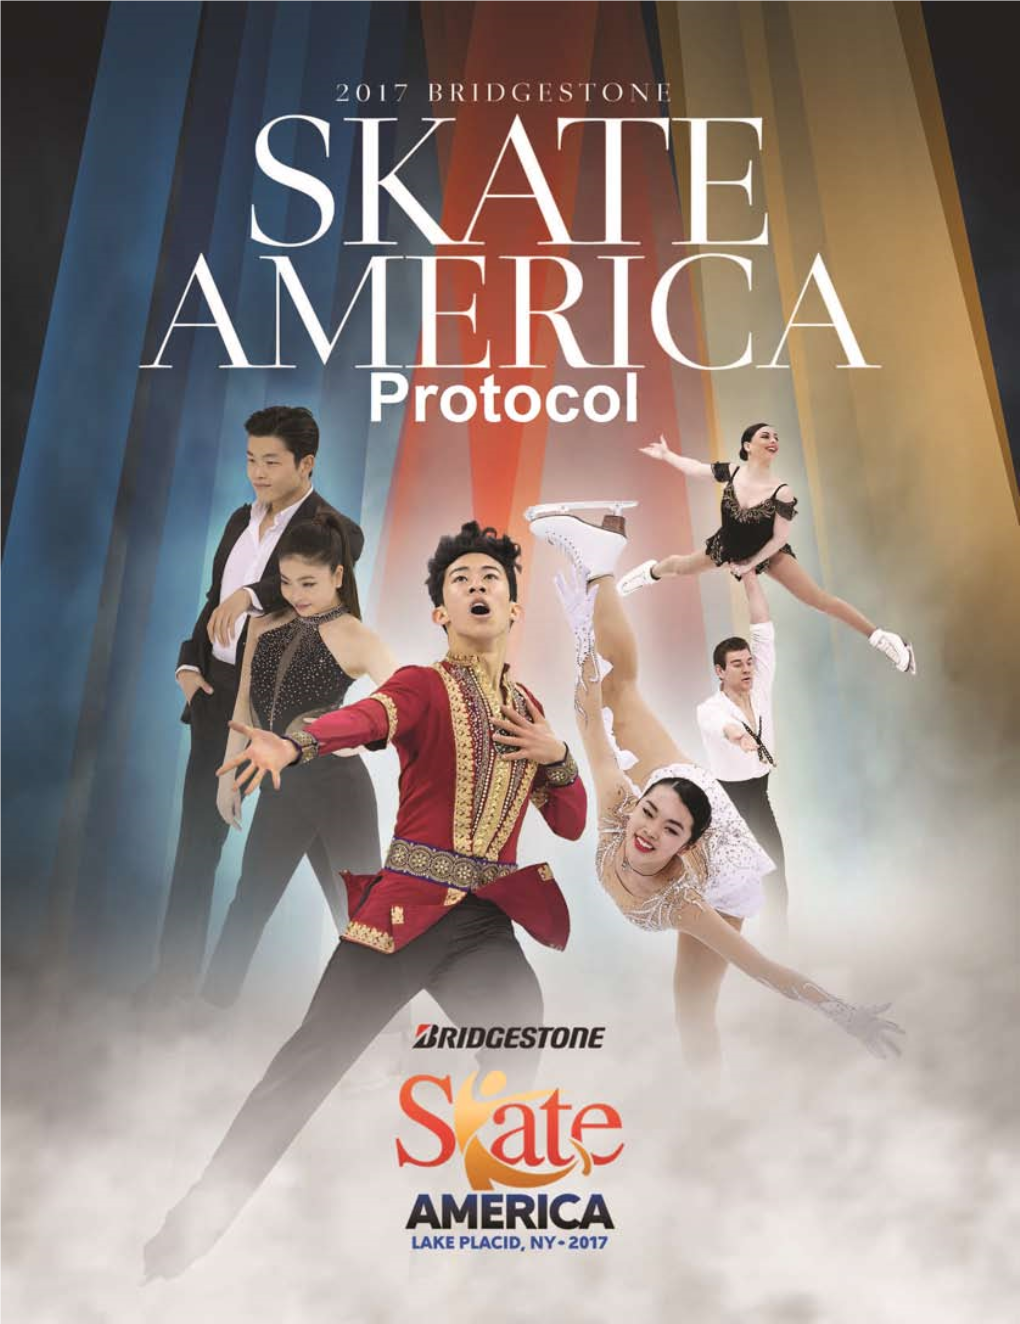 The United States Figure Skating Association